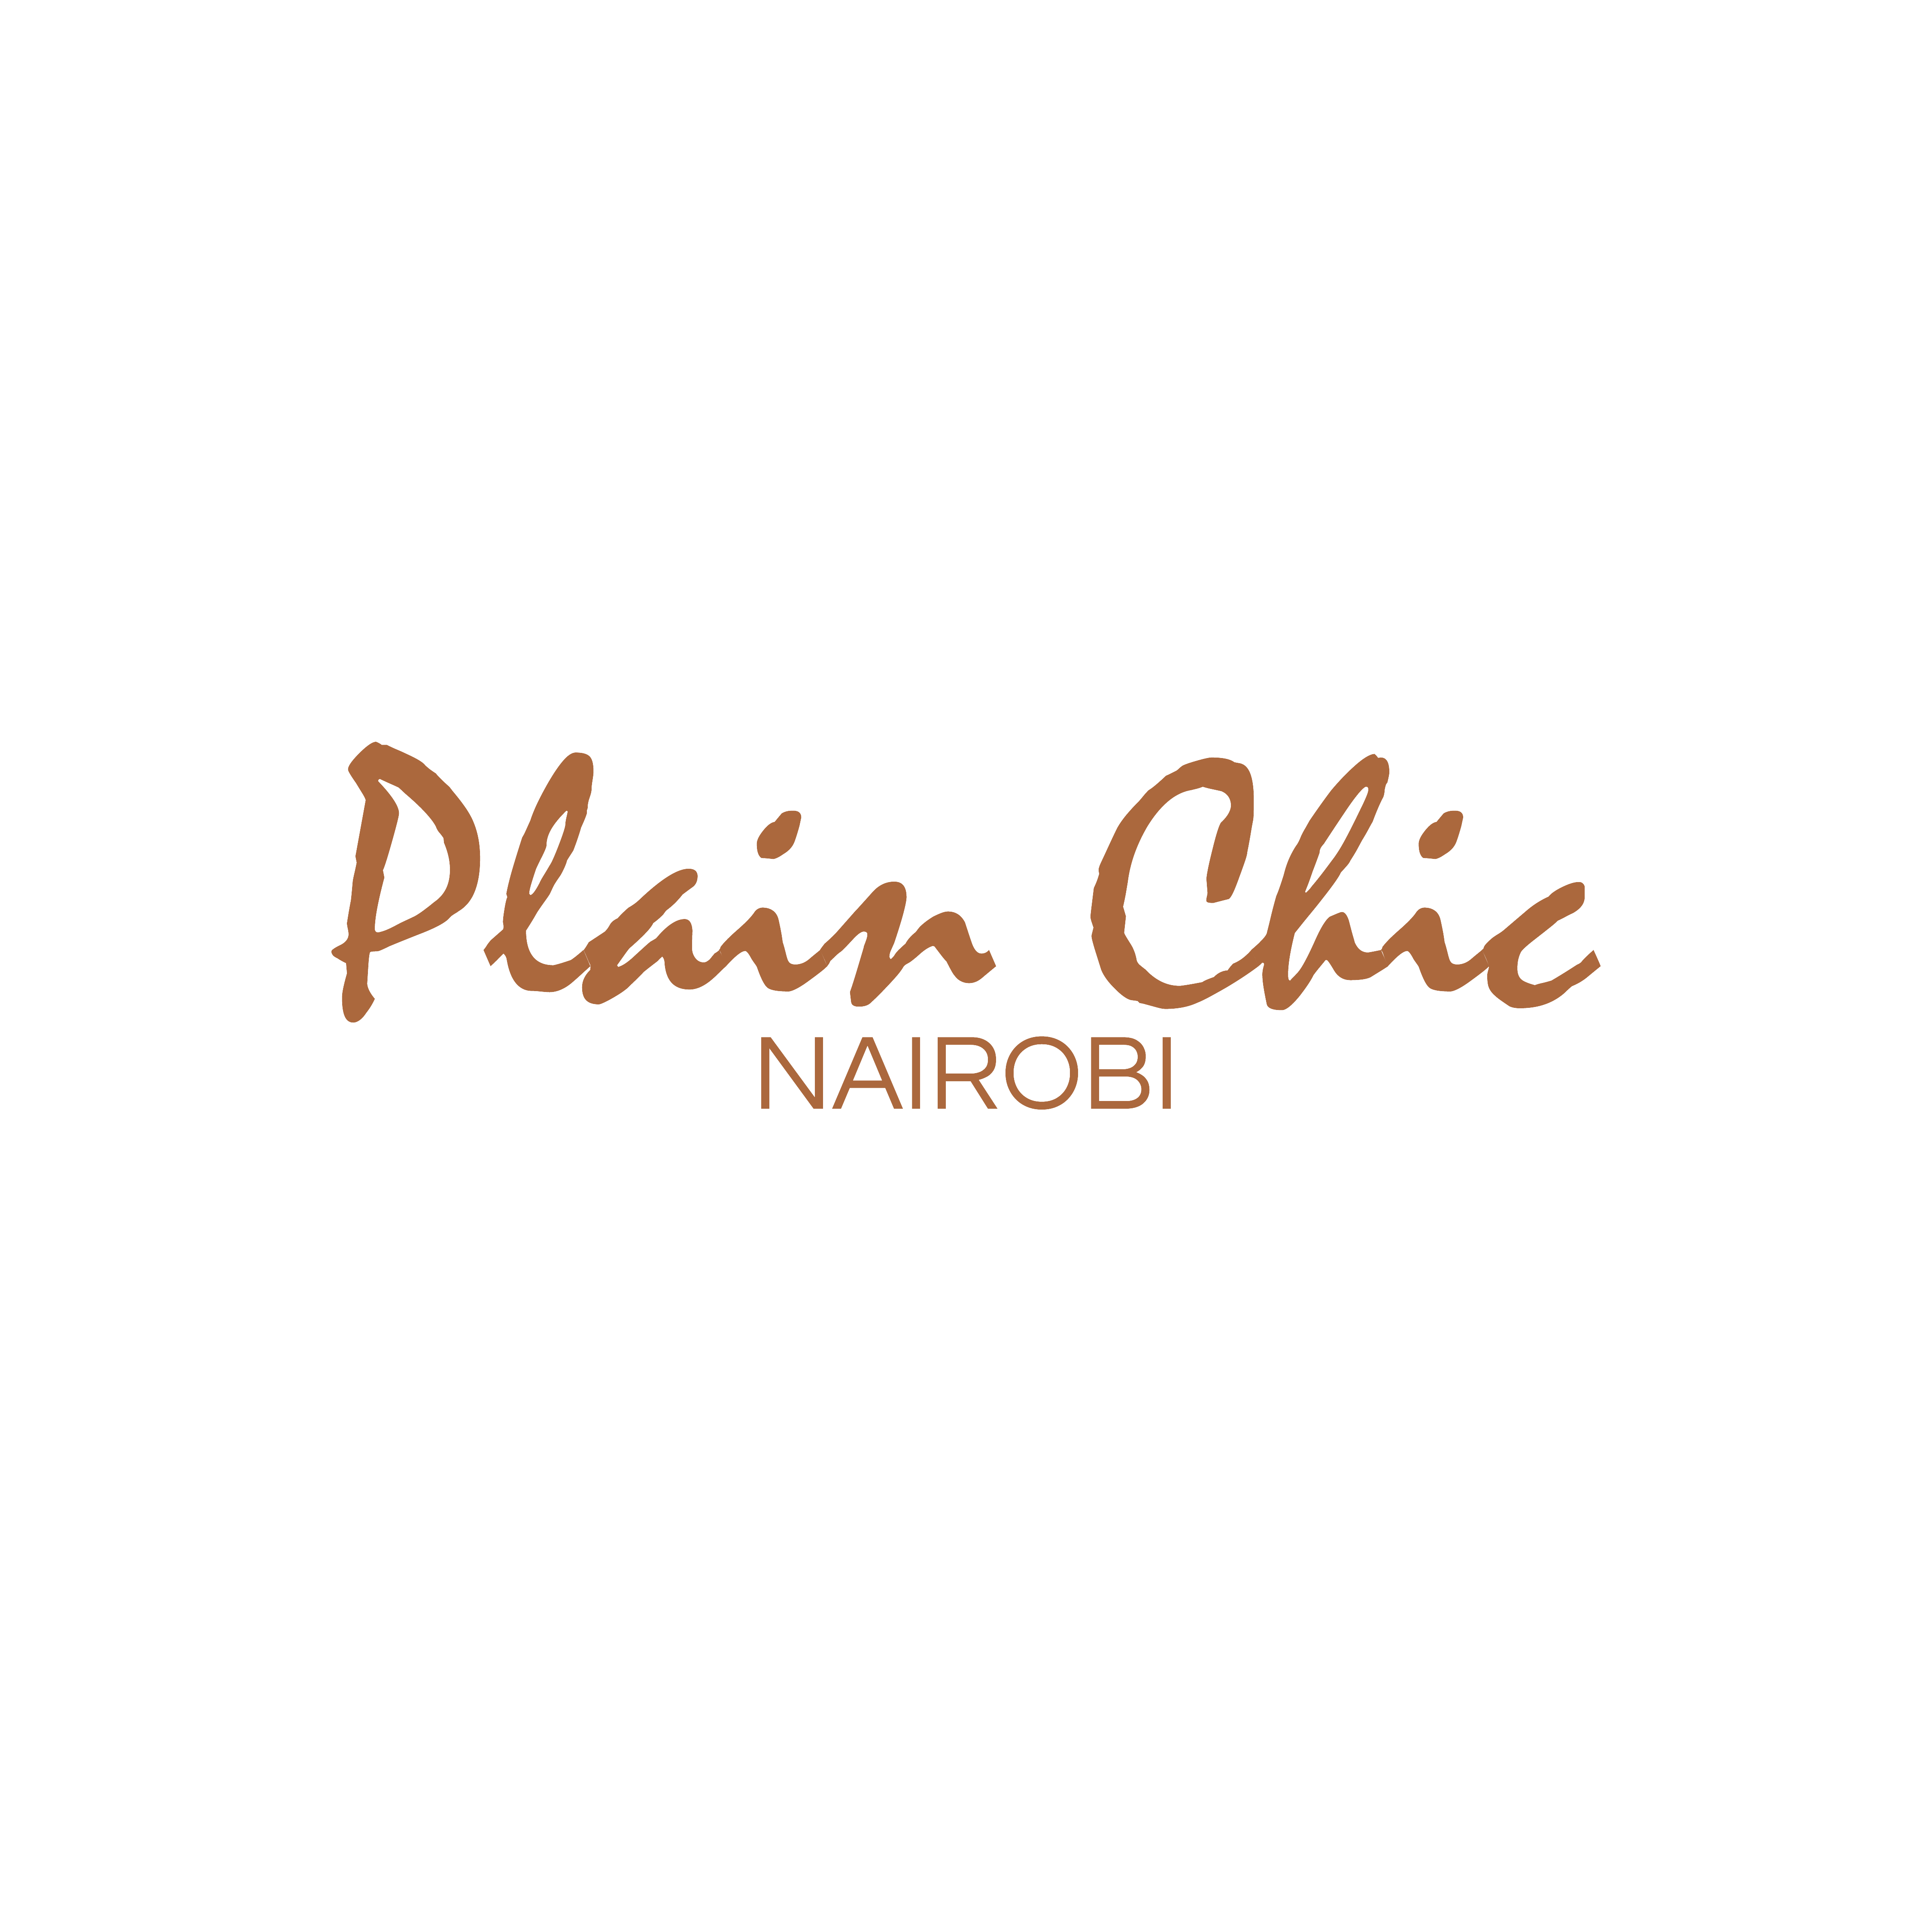 Plain Chic Nairobi